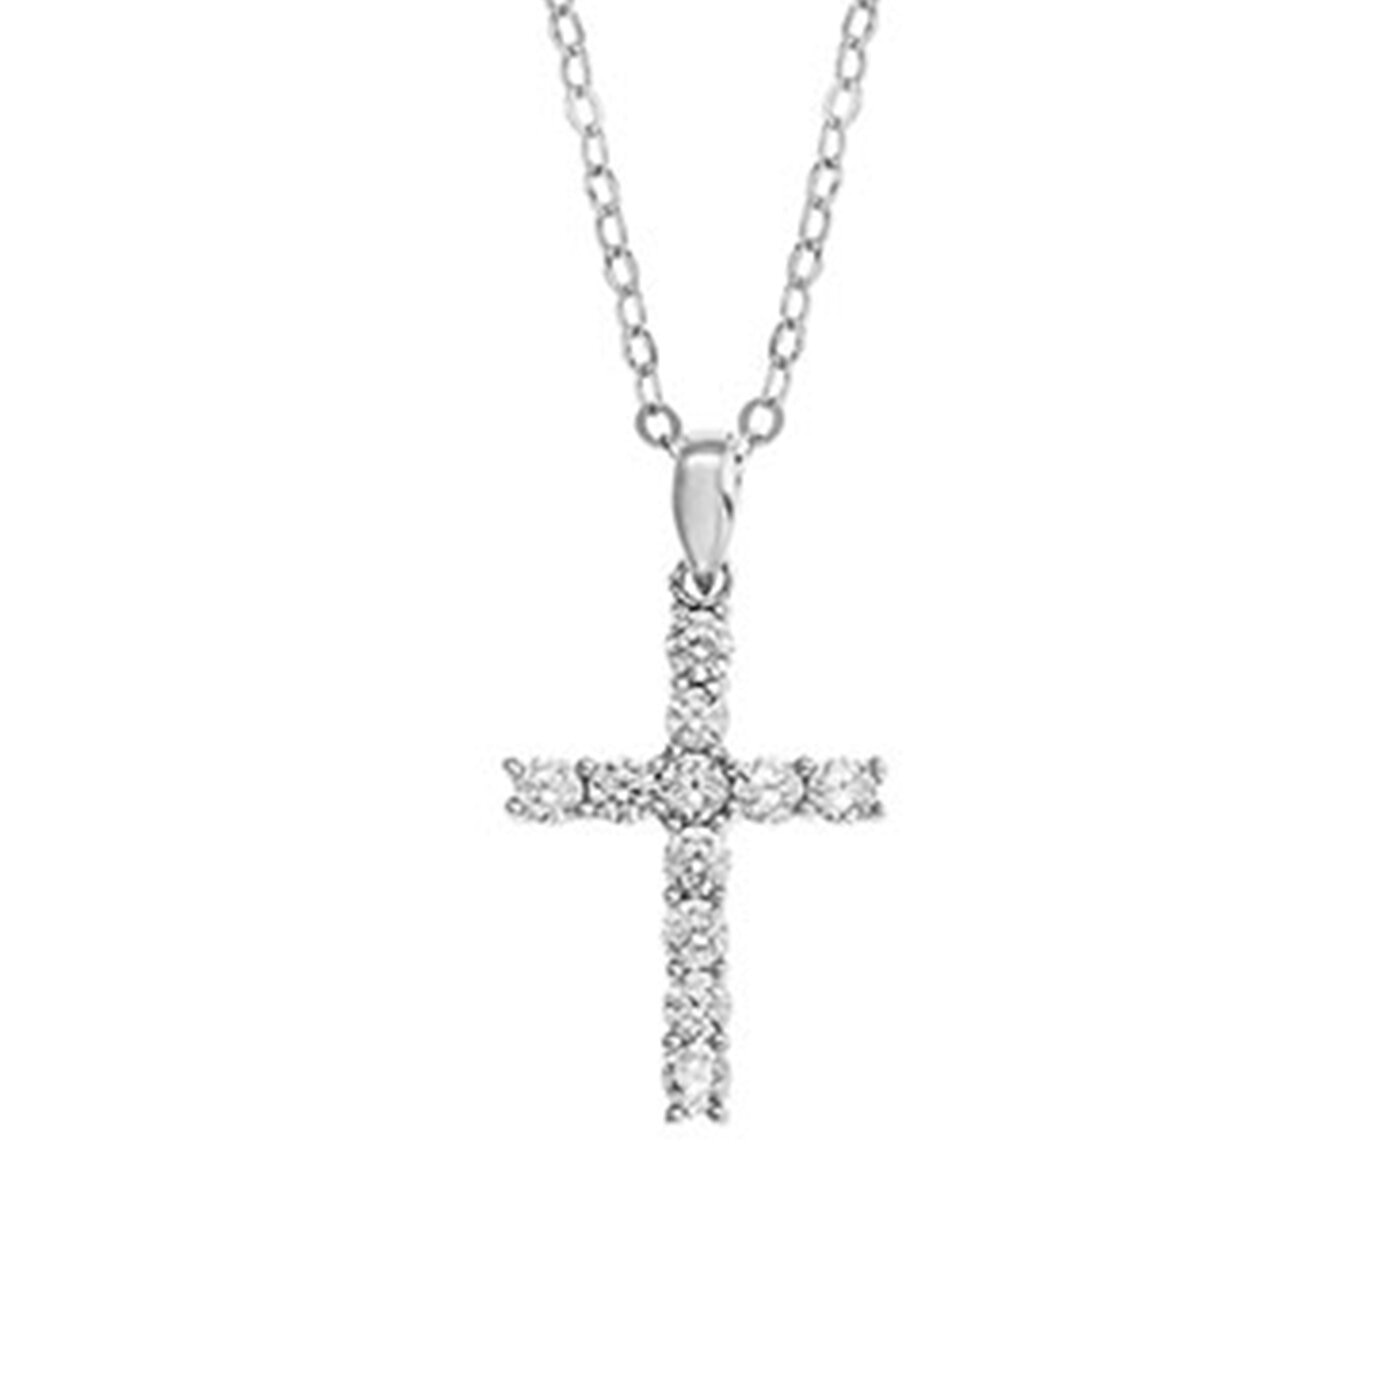 Silver cross zirkonia necklace